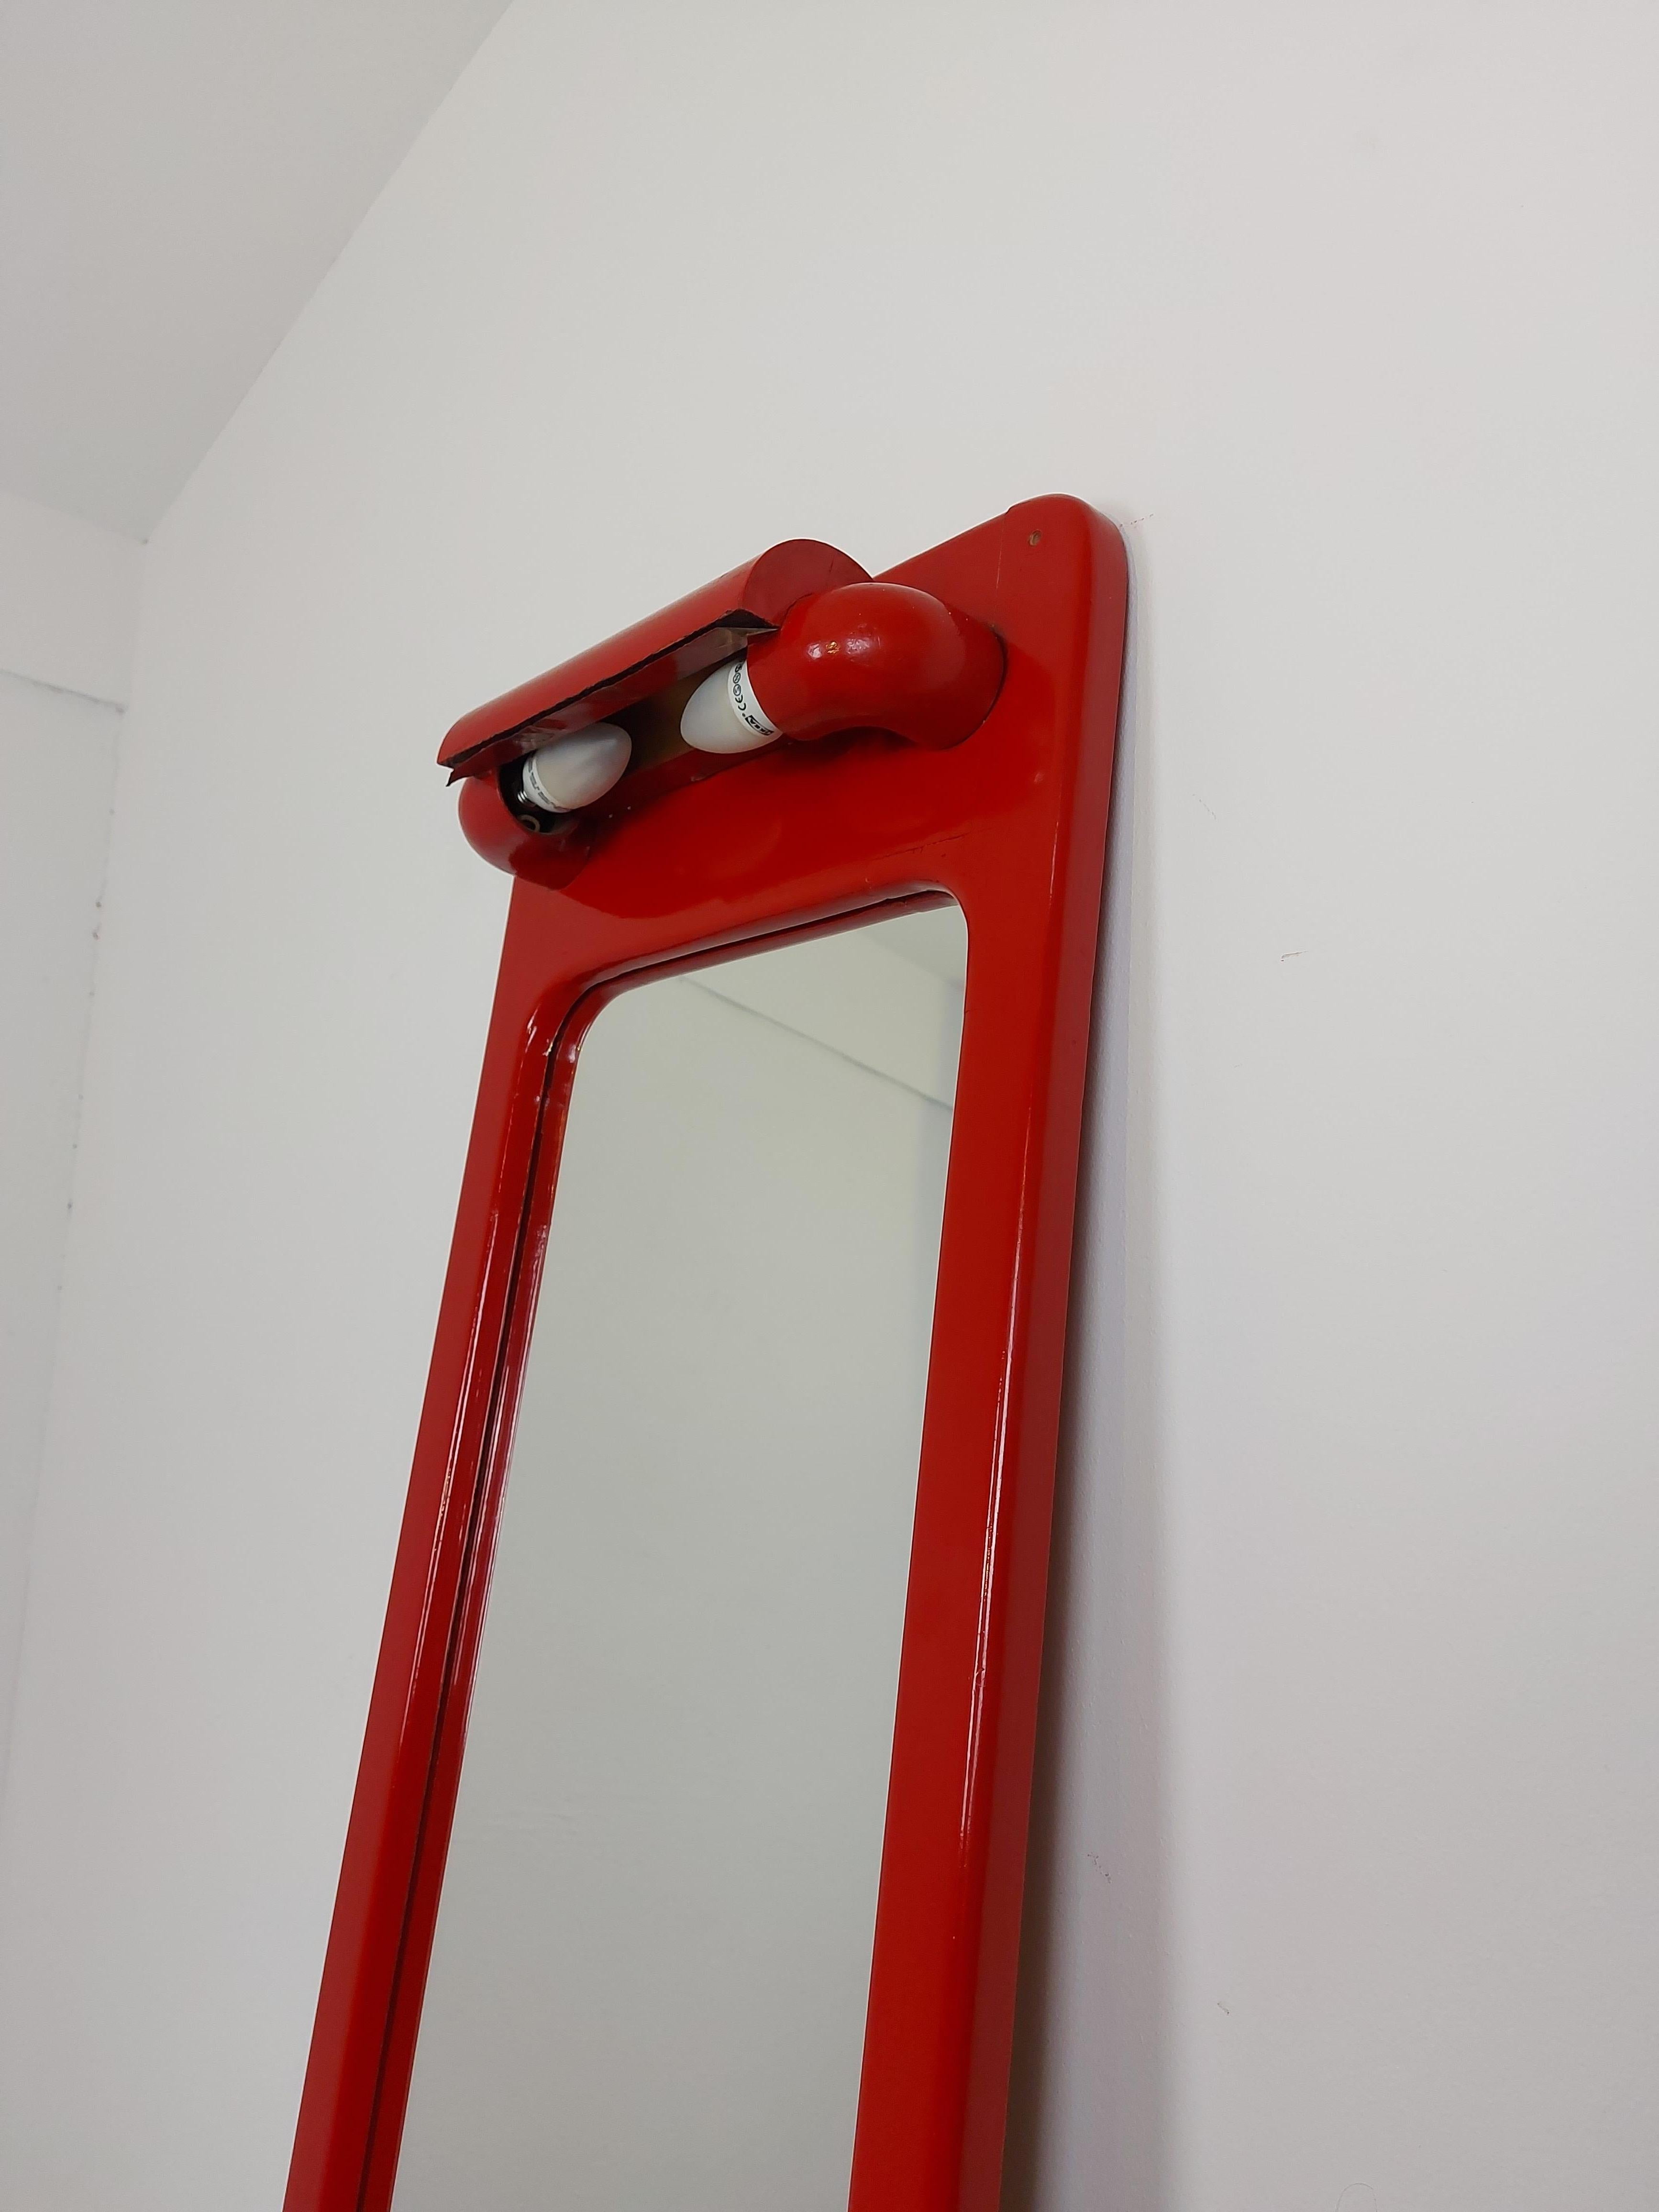 Vintage mirror

Period: 1970s

Style: Mid-Century Modern, Italian

Dimensions: H-148 cm, W-43 cm, D-3 cm.